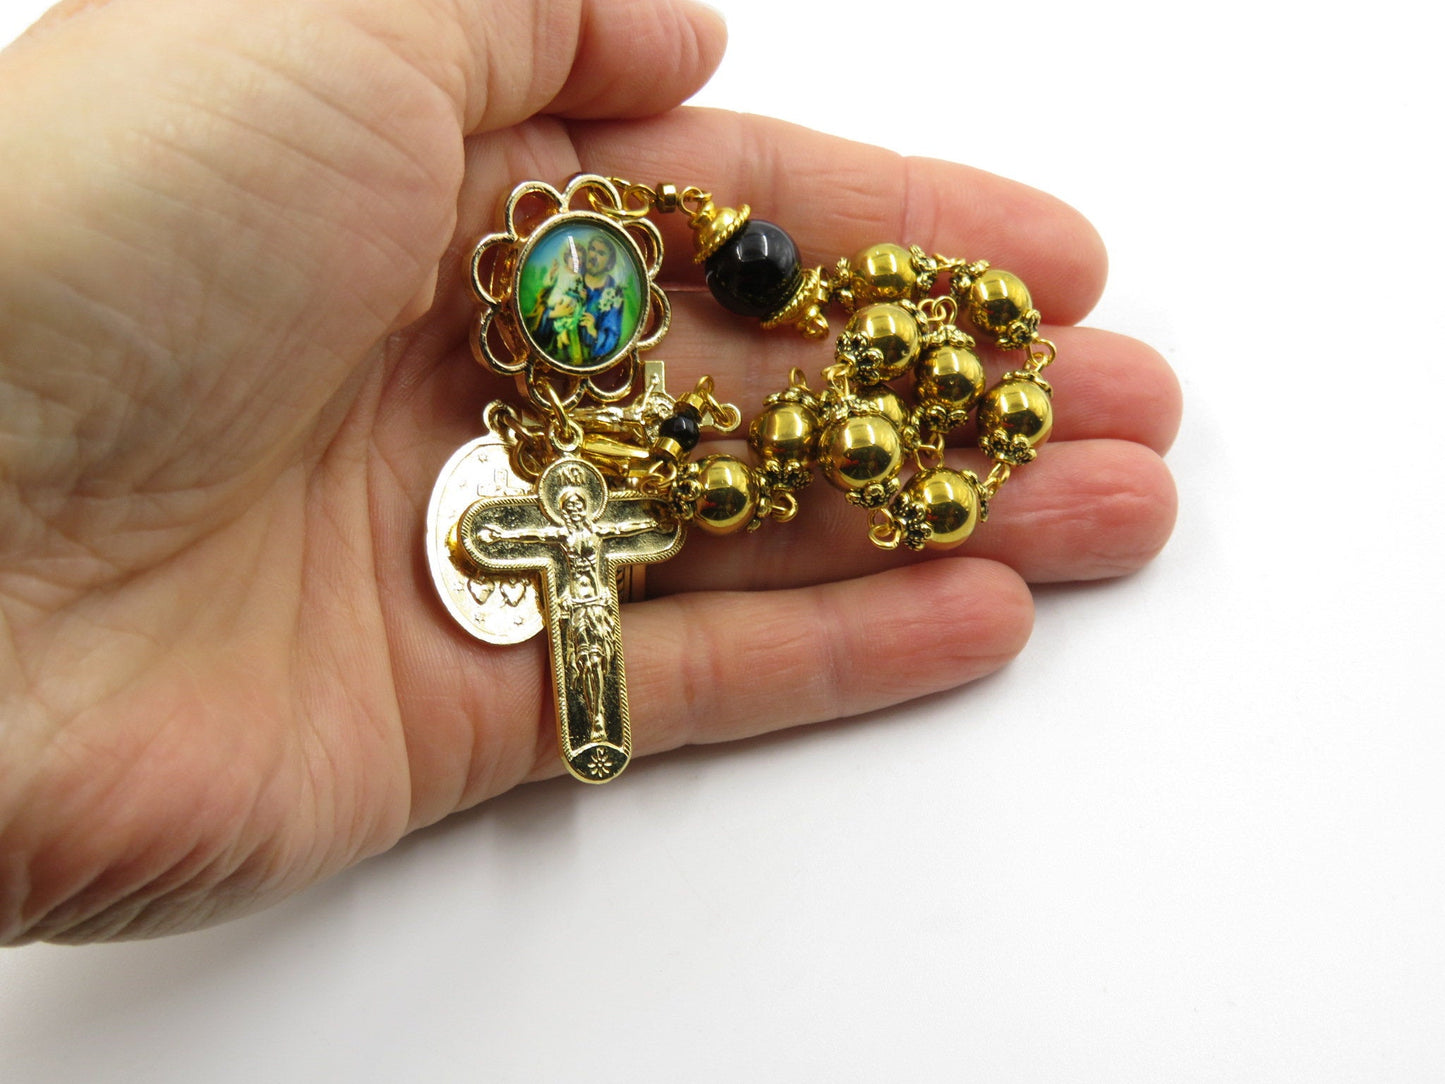 Saint Joseph gold Hematite single decade rosary, Men's tenner rosary beads, Miraculous medal Travel Rosary beads, Pocket Rosary beads.